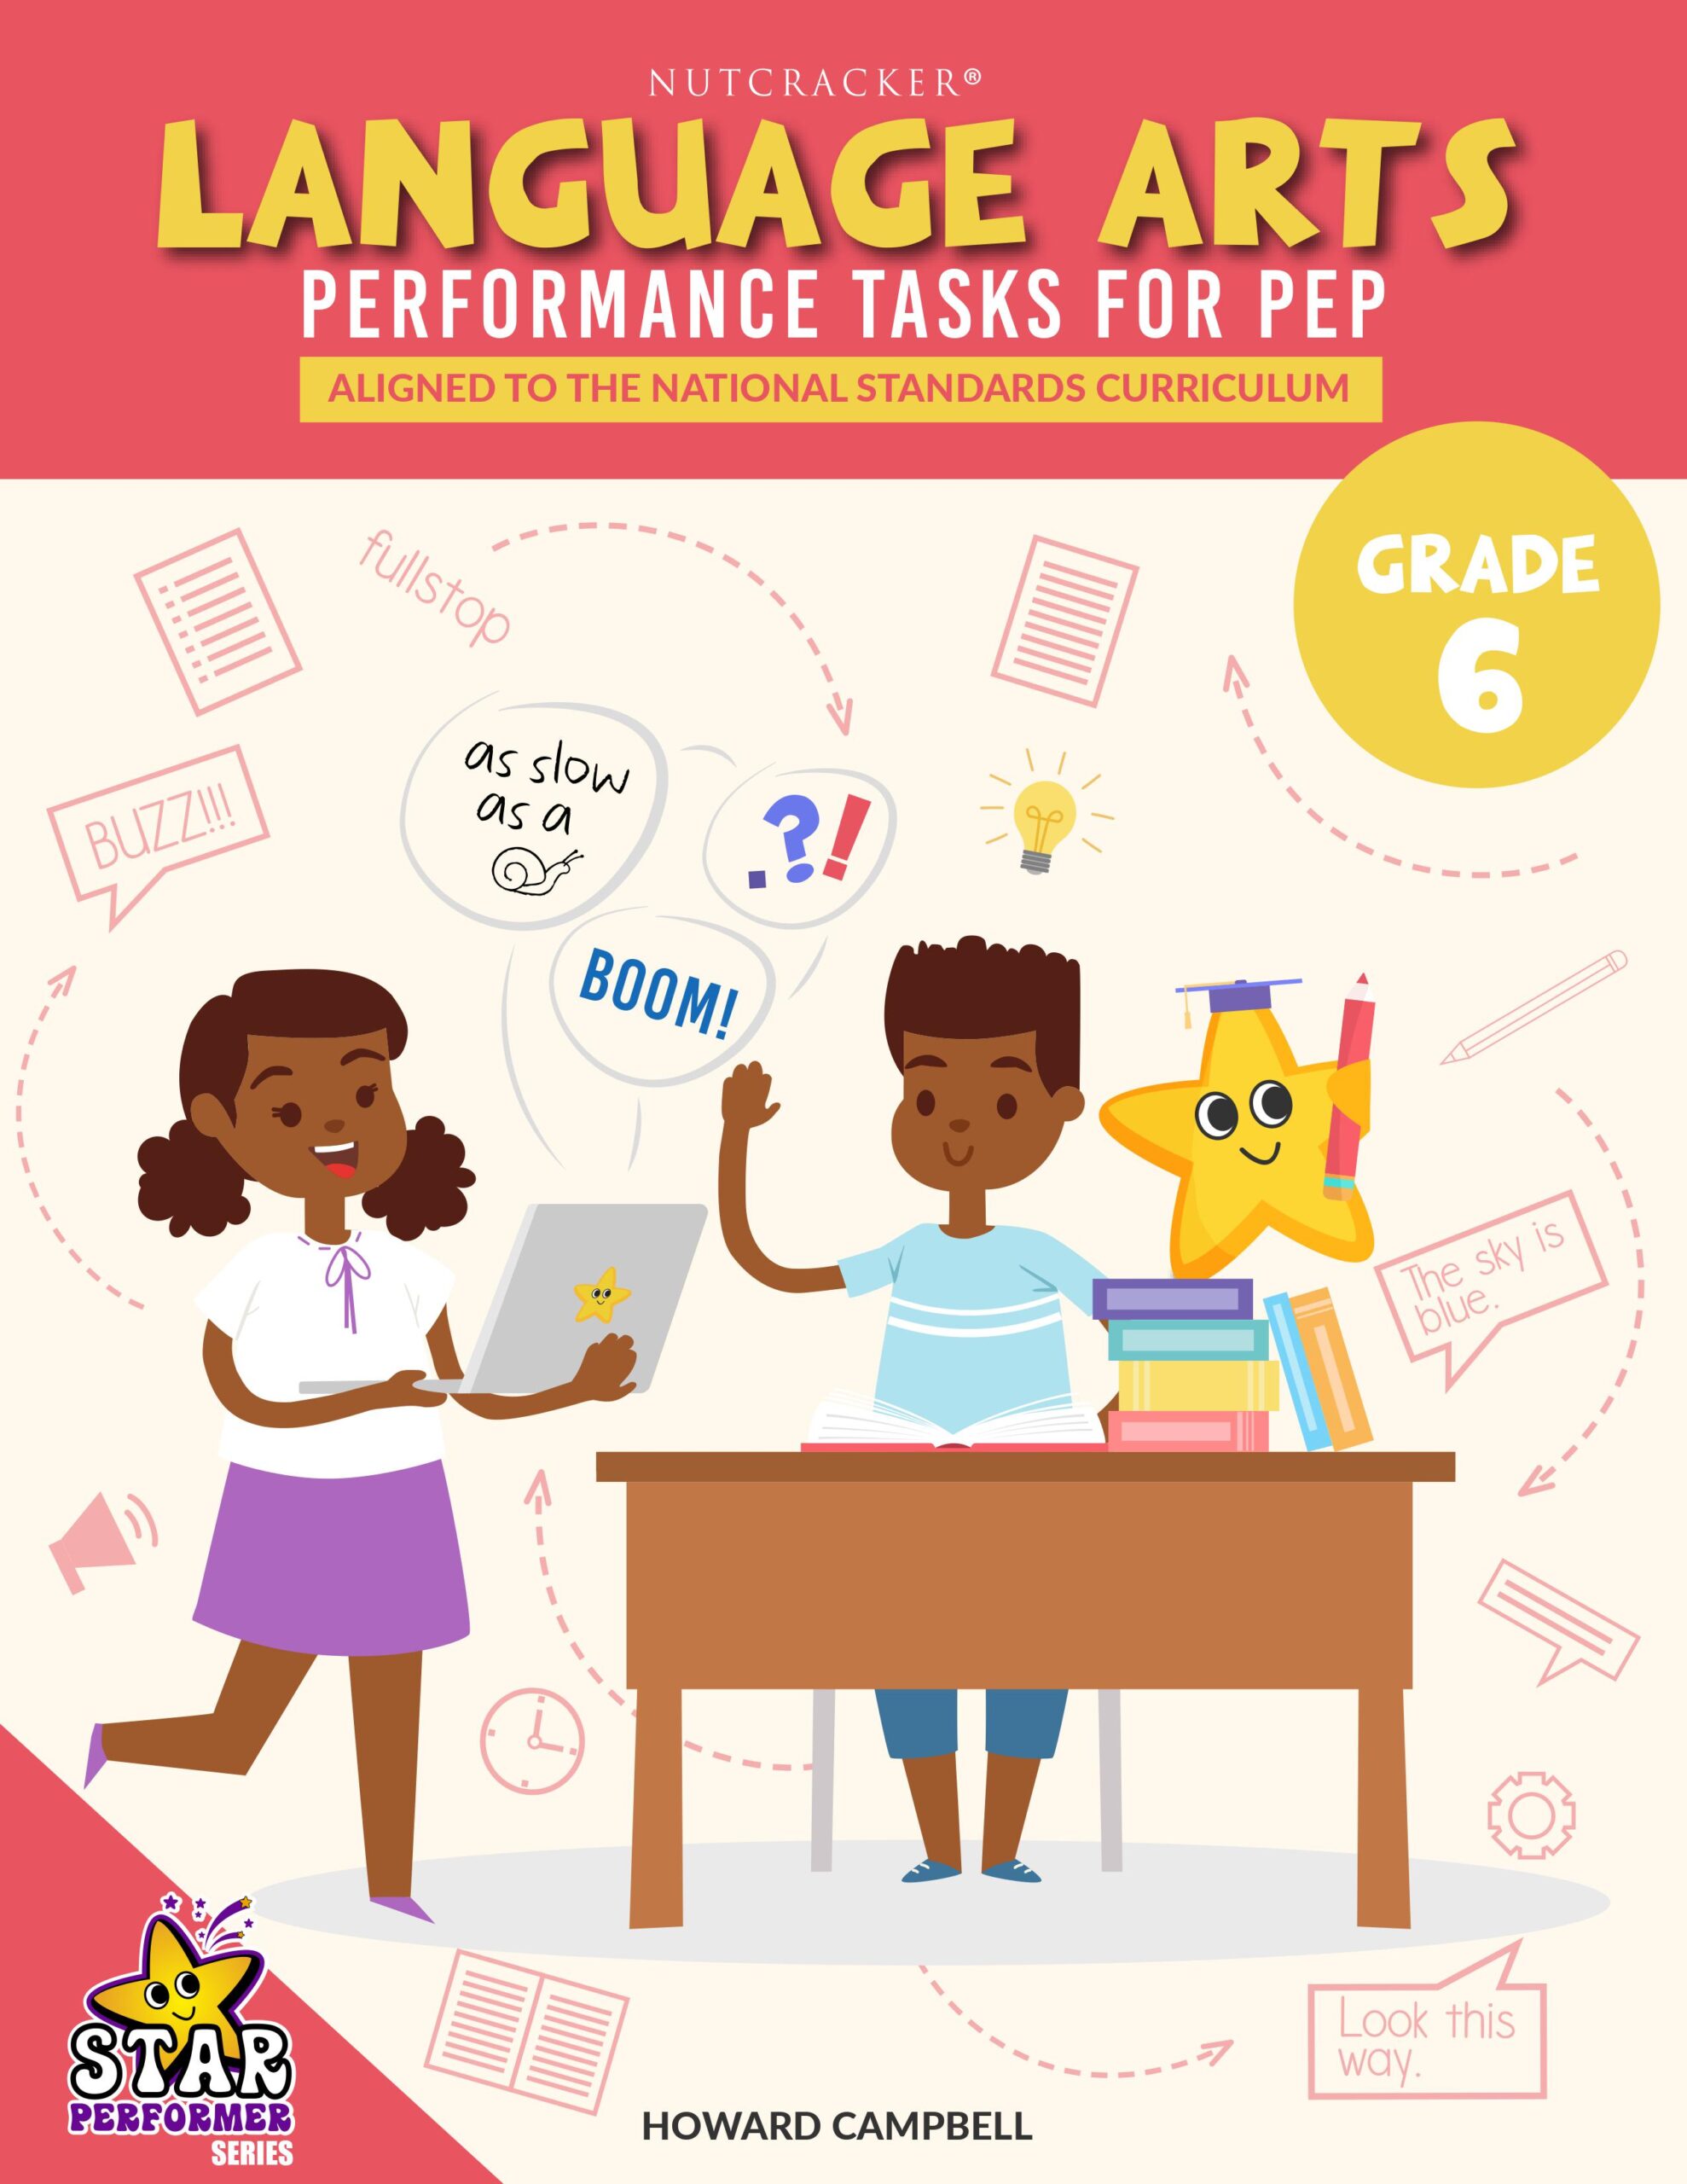 Language Arts Performance Tasks For PEP